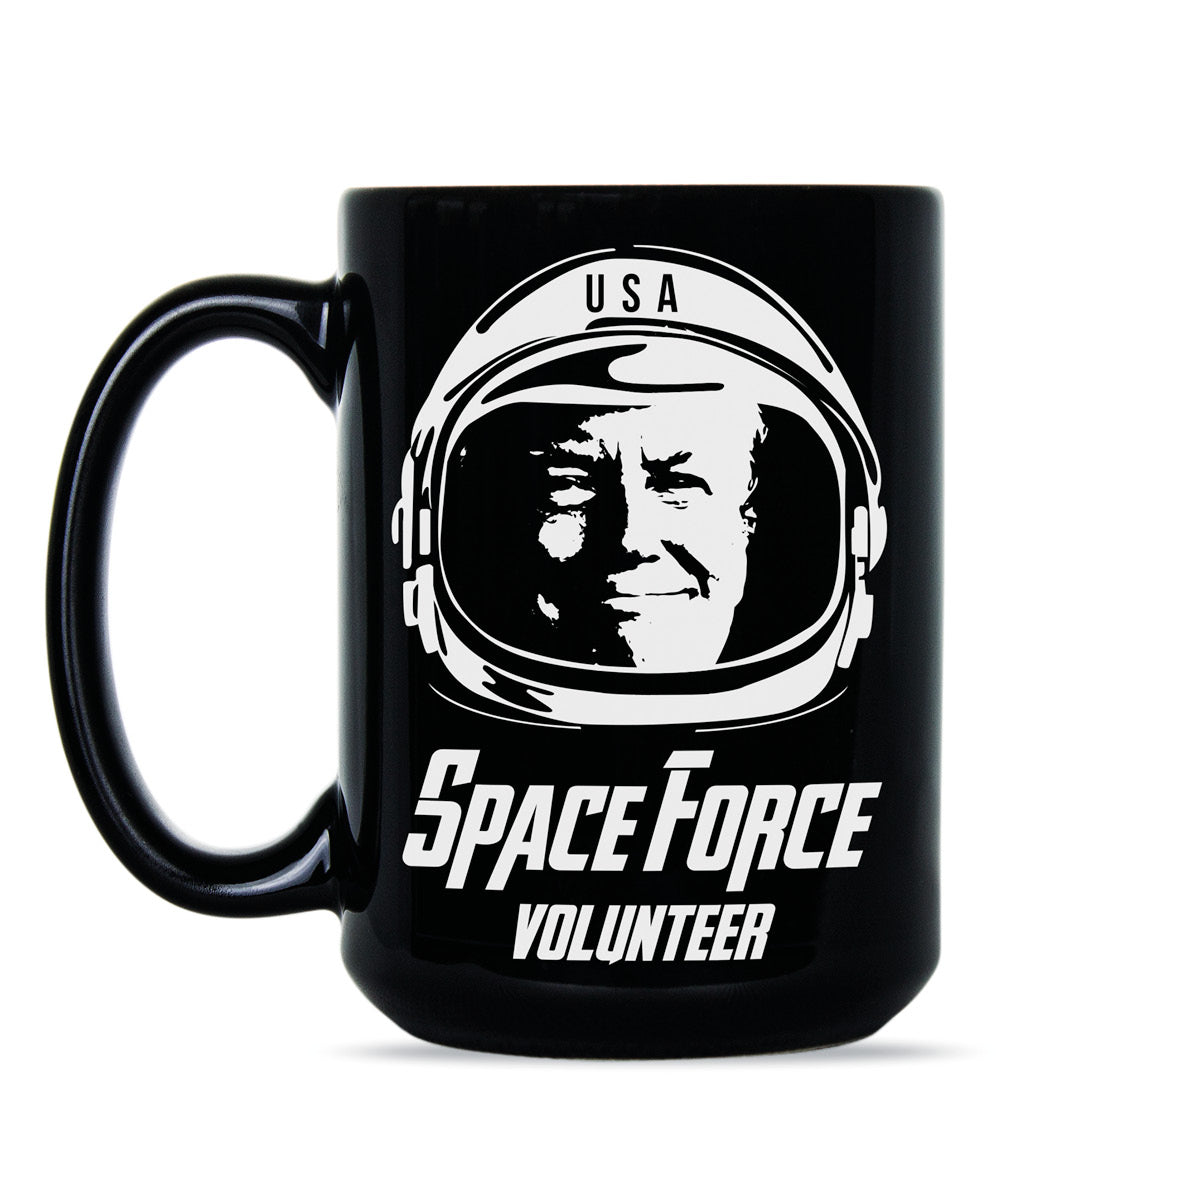 Space Force Coffee Mug Space Force Mug Funny Trump Coffee Cups | eBay1200 x 1200